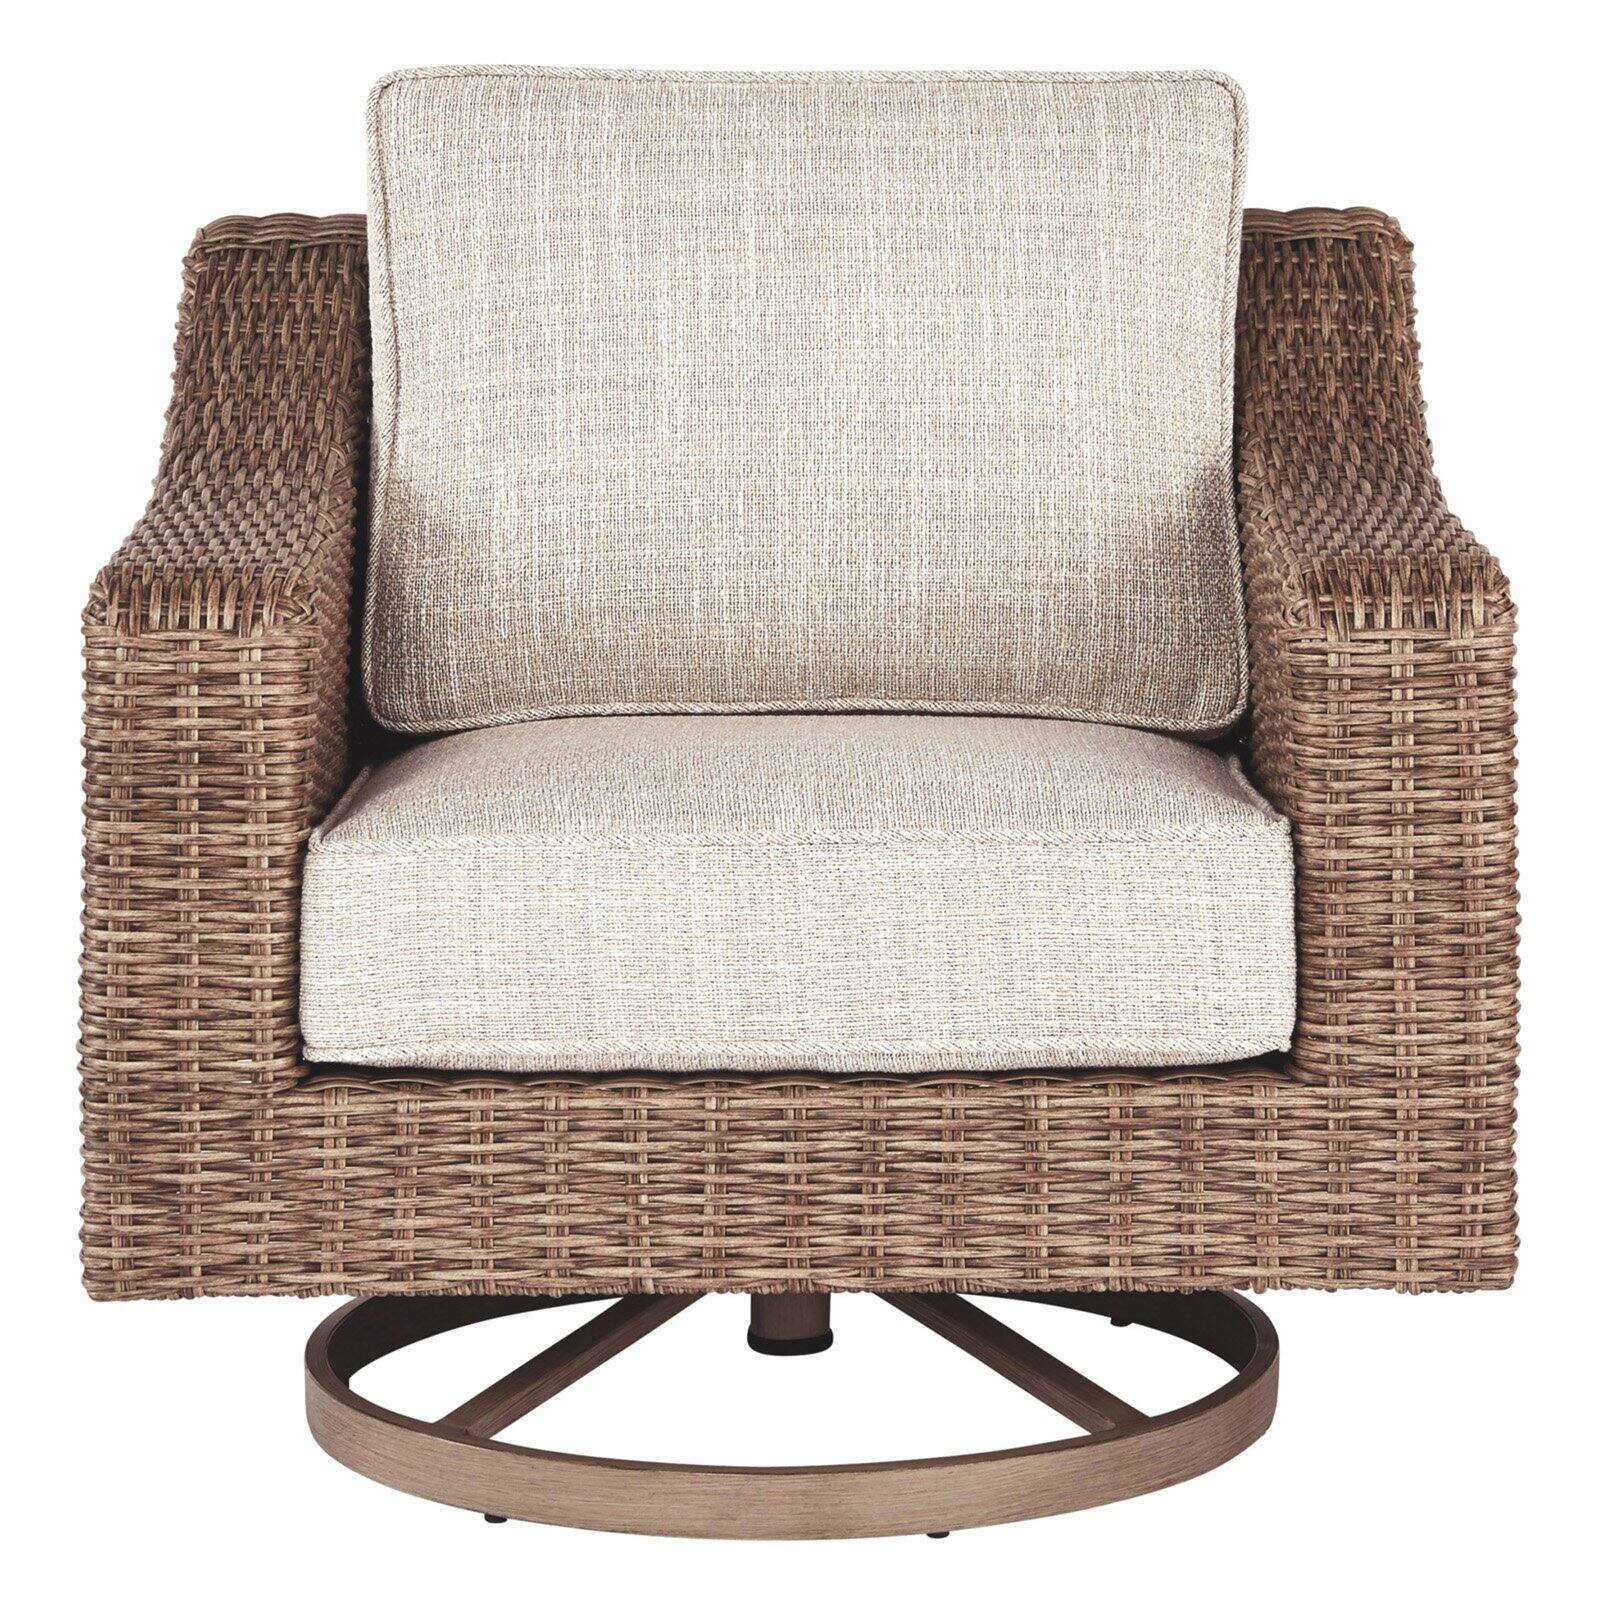 Ashley Furniture Beachcroft Swivel Patio Arm Chair in Beige - image 2 of 7